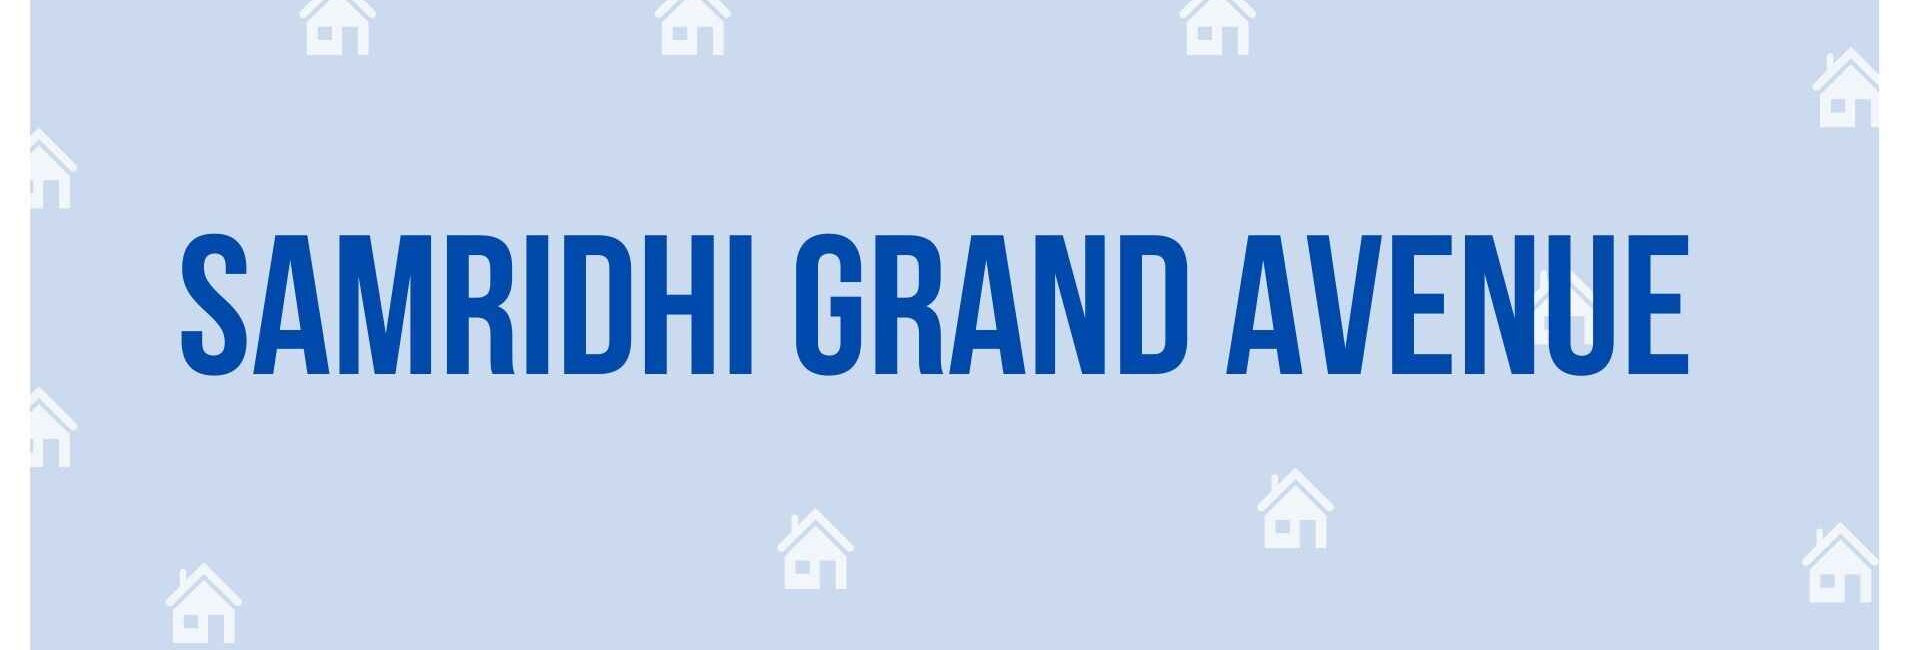 Samridhi Grand Avenue - Property Dealer in Noida